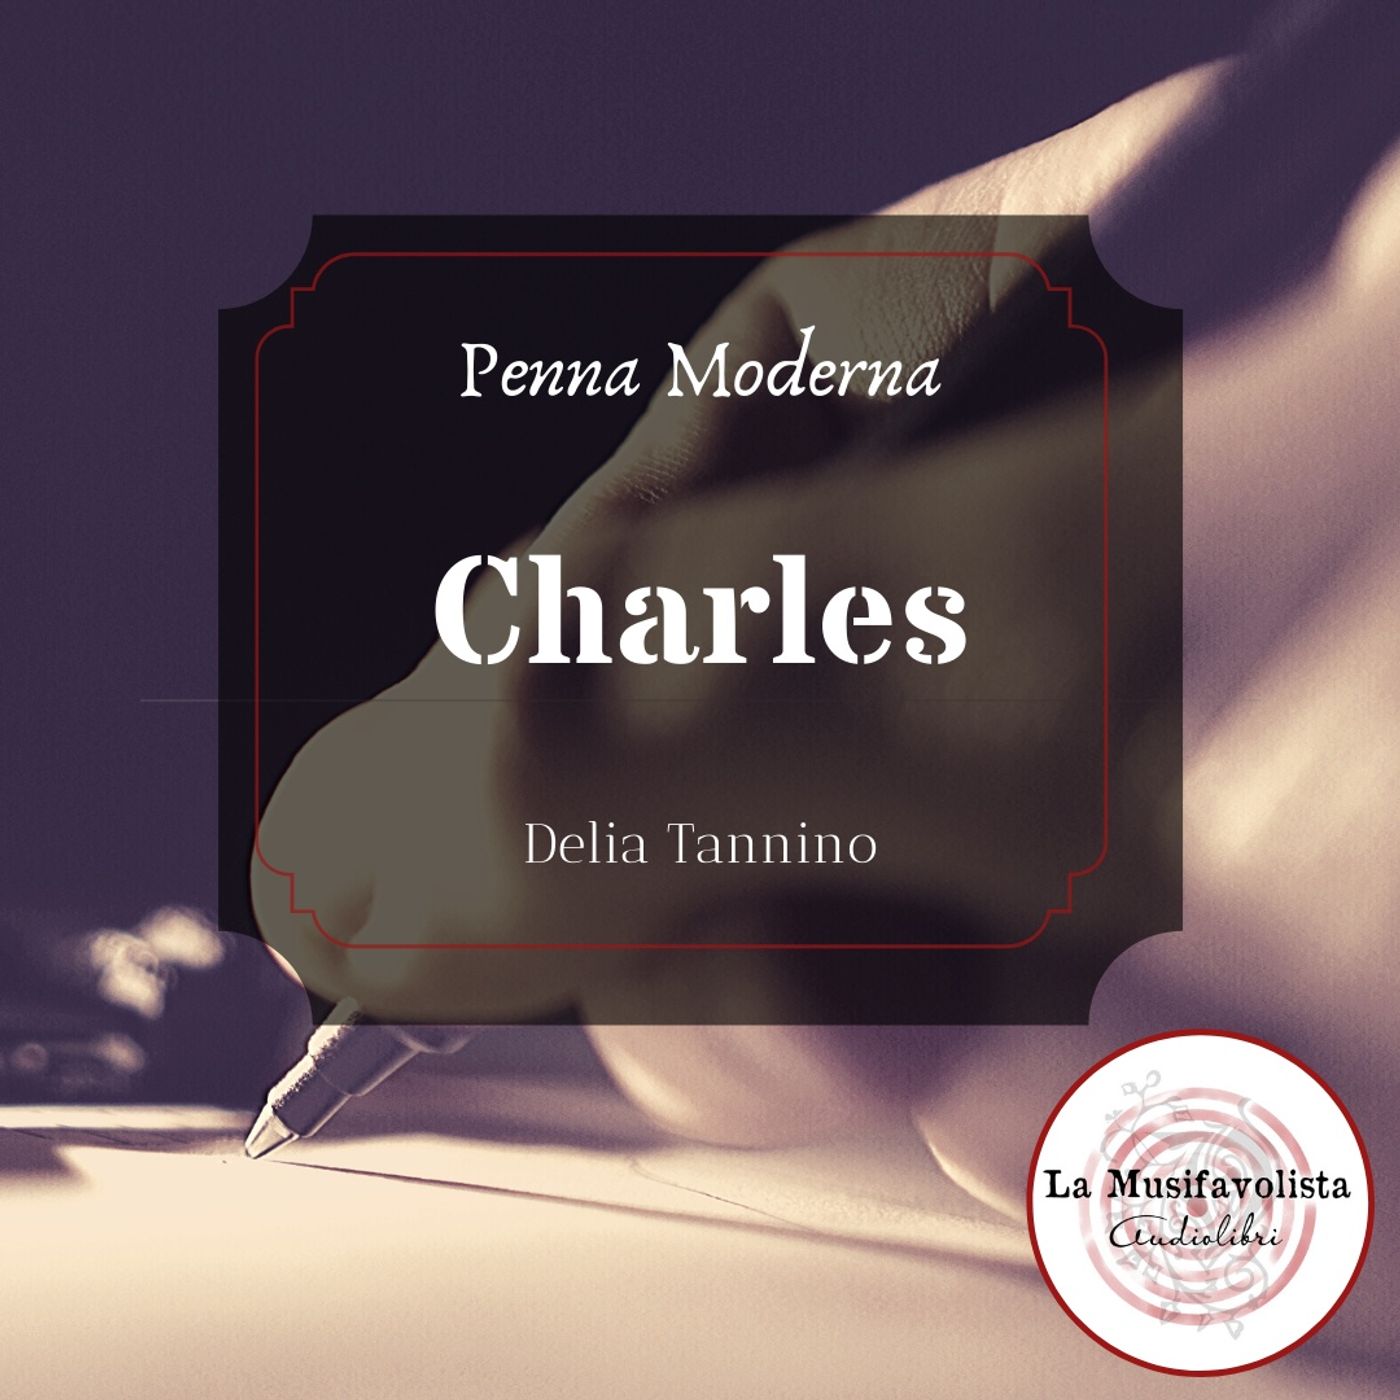 ✍ Charles di Delia Tannino ✎ PENNA MODERNA ✐